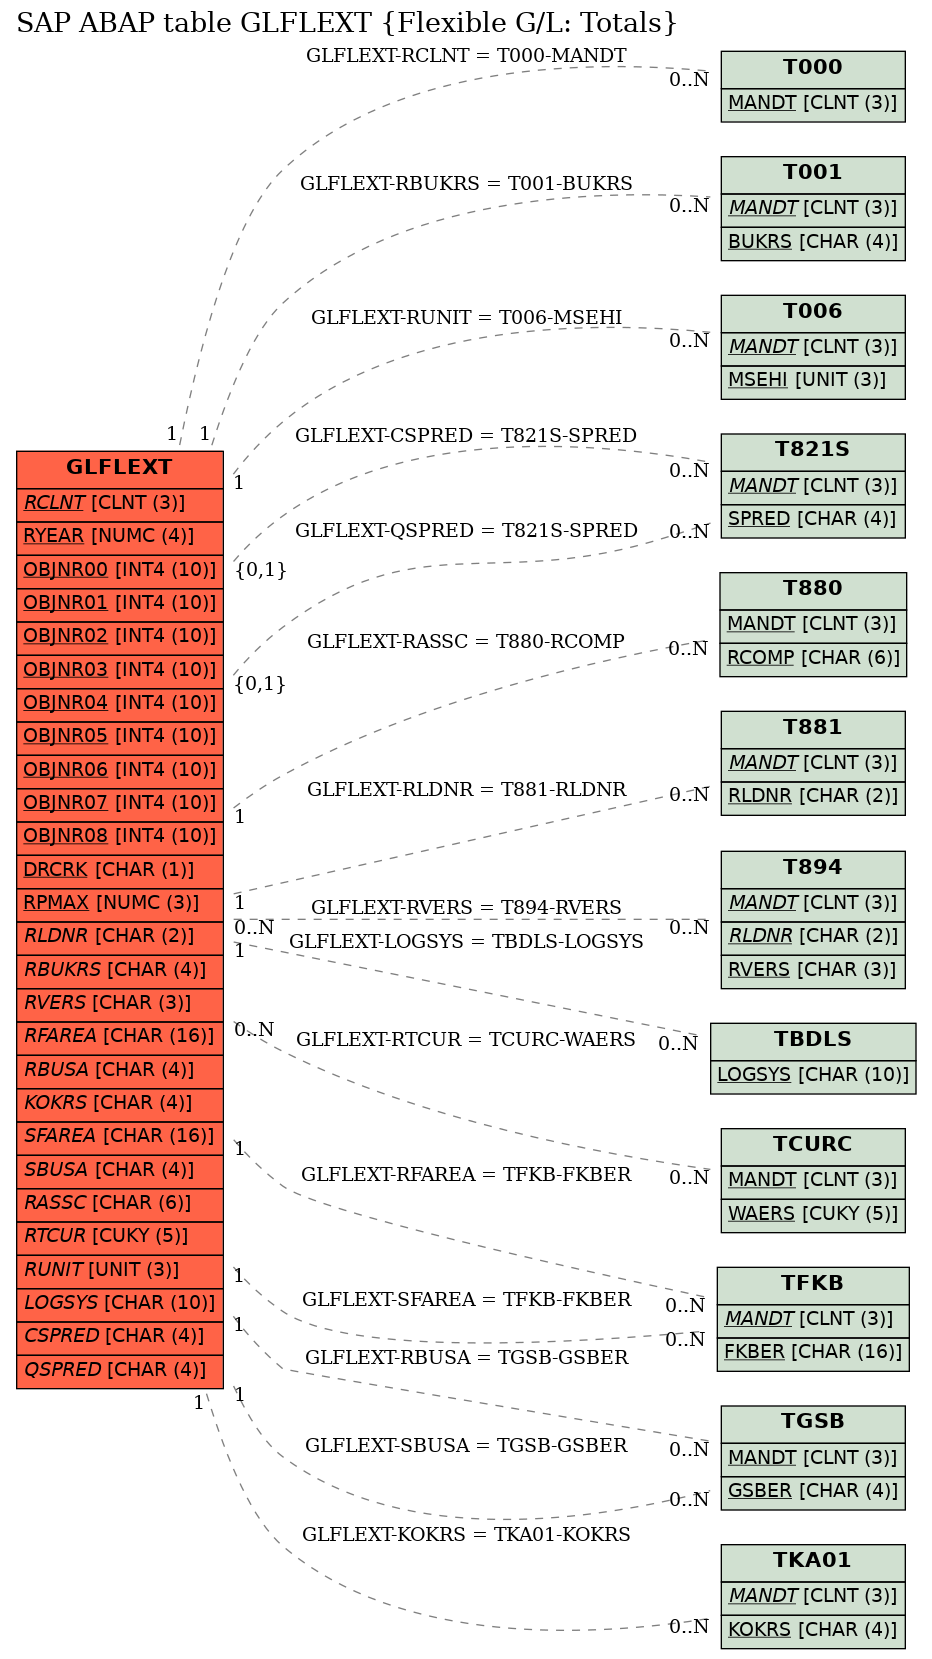 E-R Diagram for table GLFLEXT (Flexible G/L: Totals)